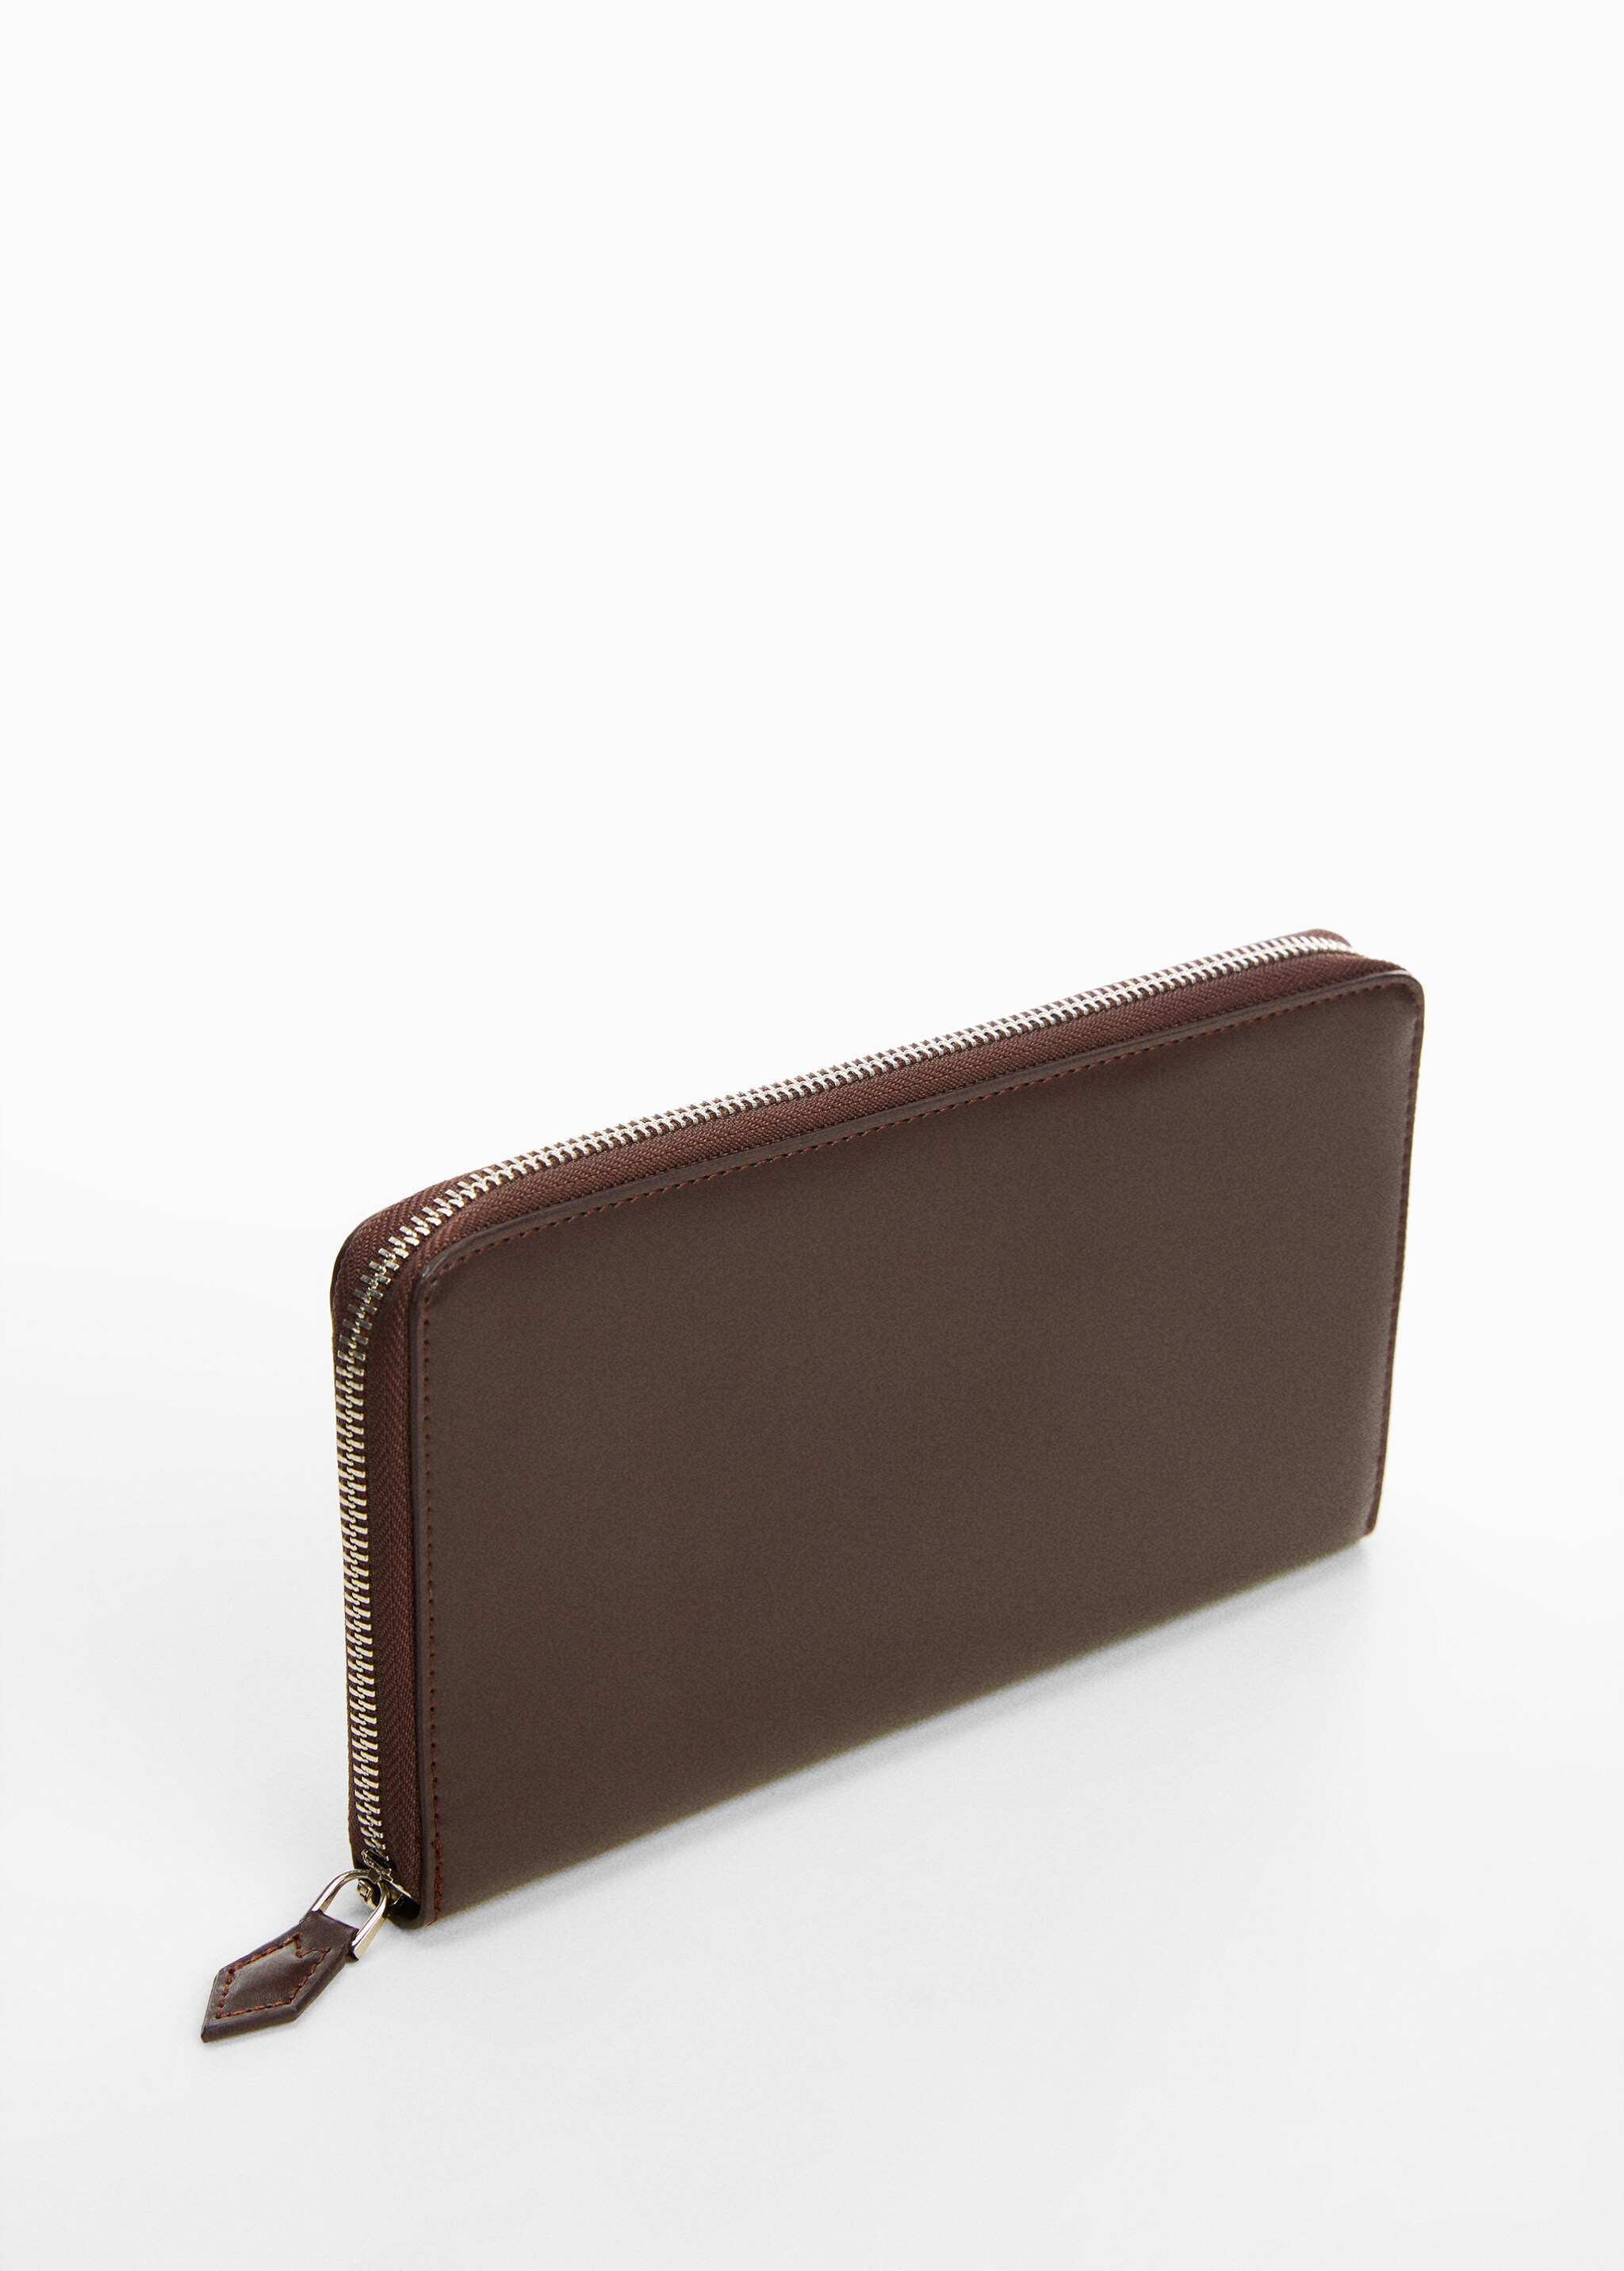 Anti-contactless card holder wallet - Medium plane